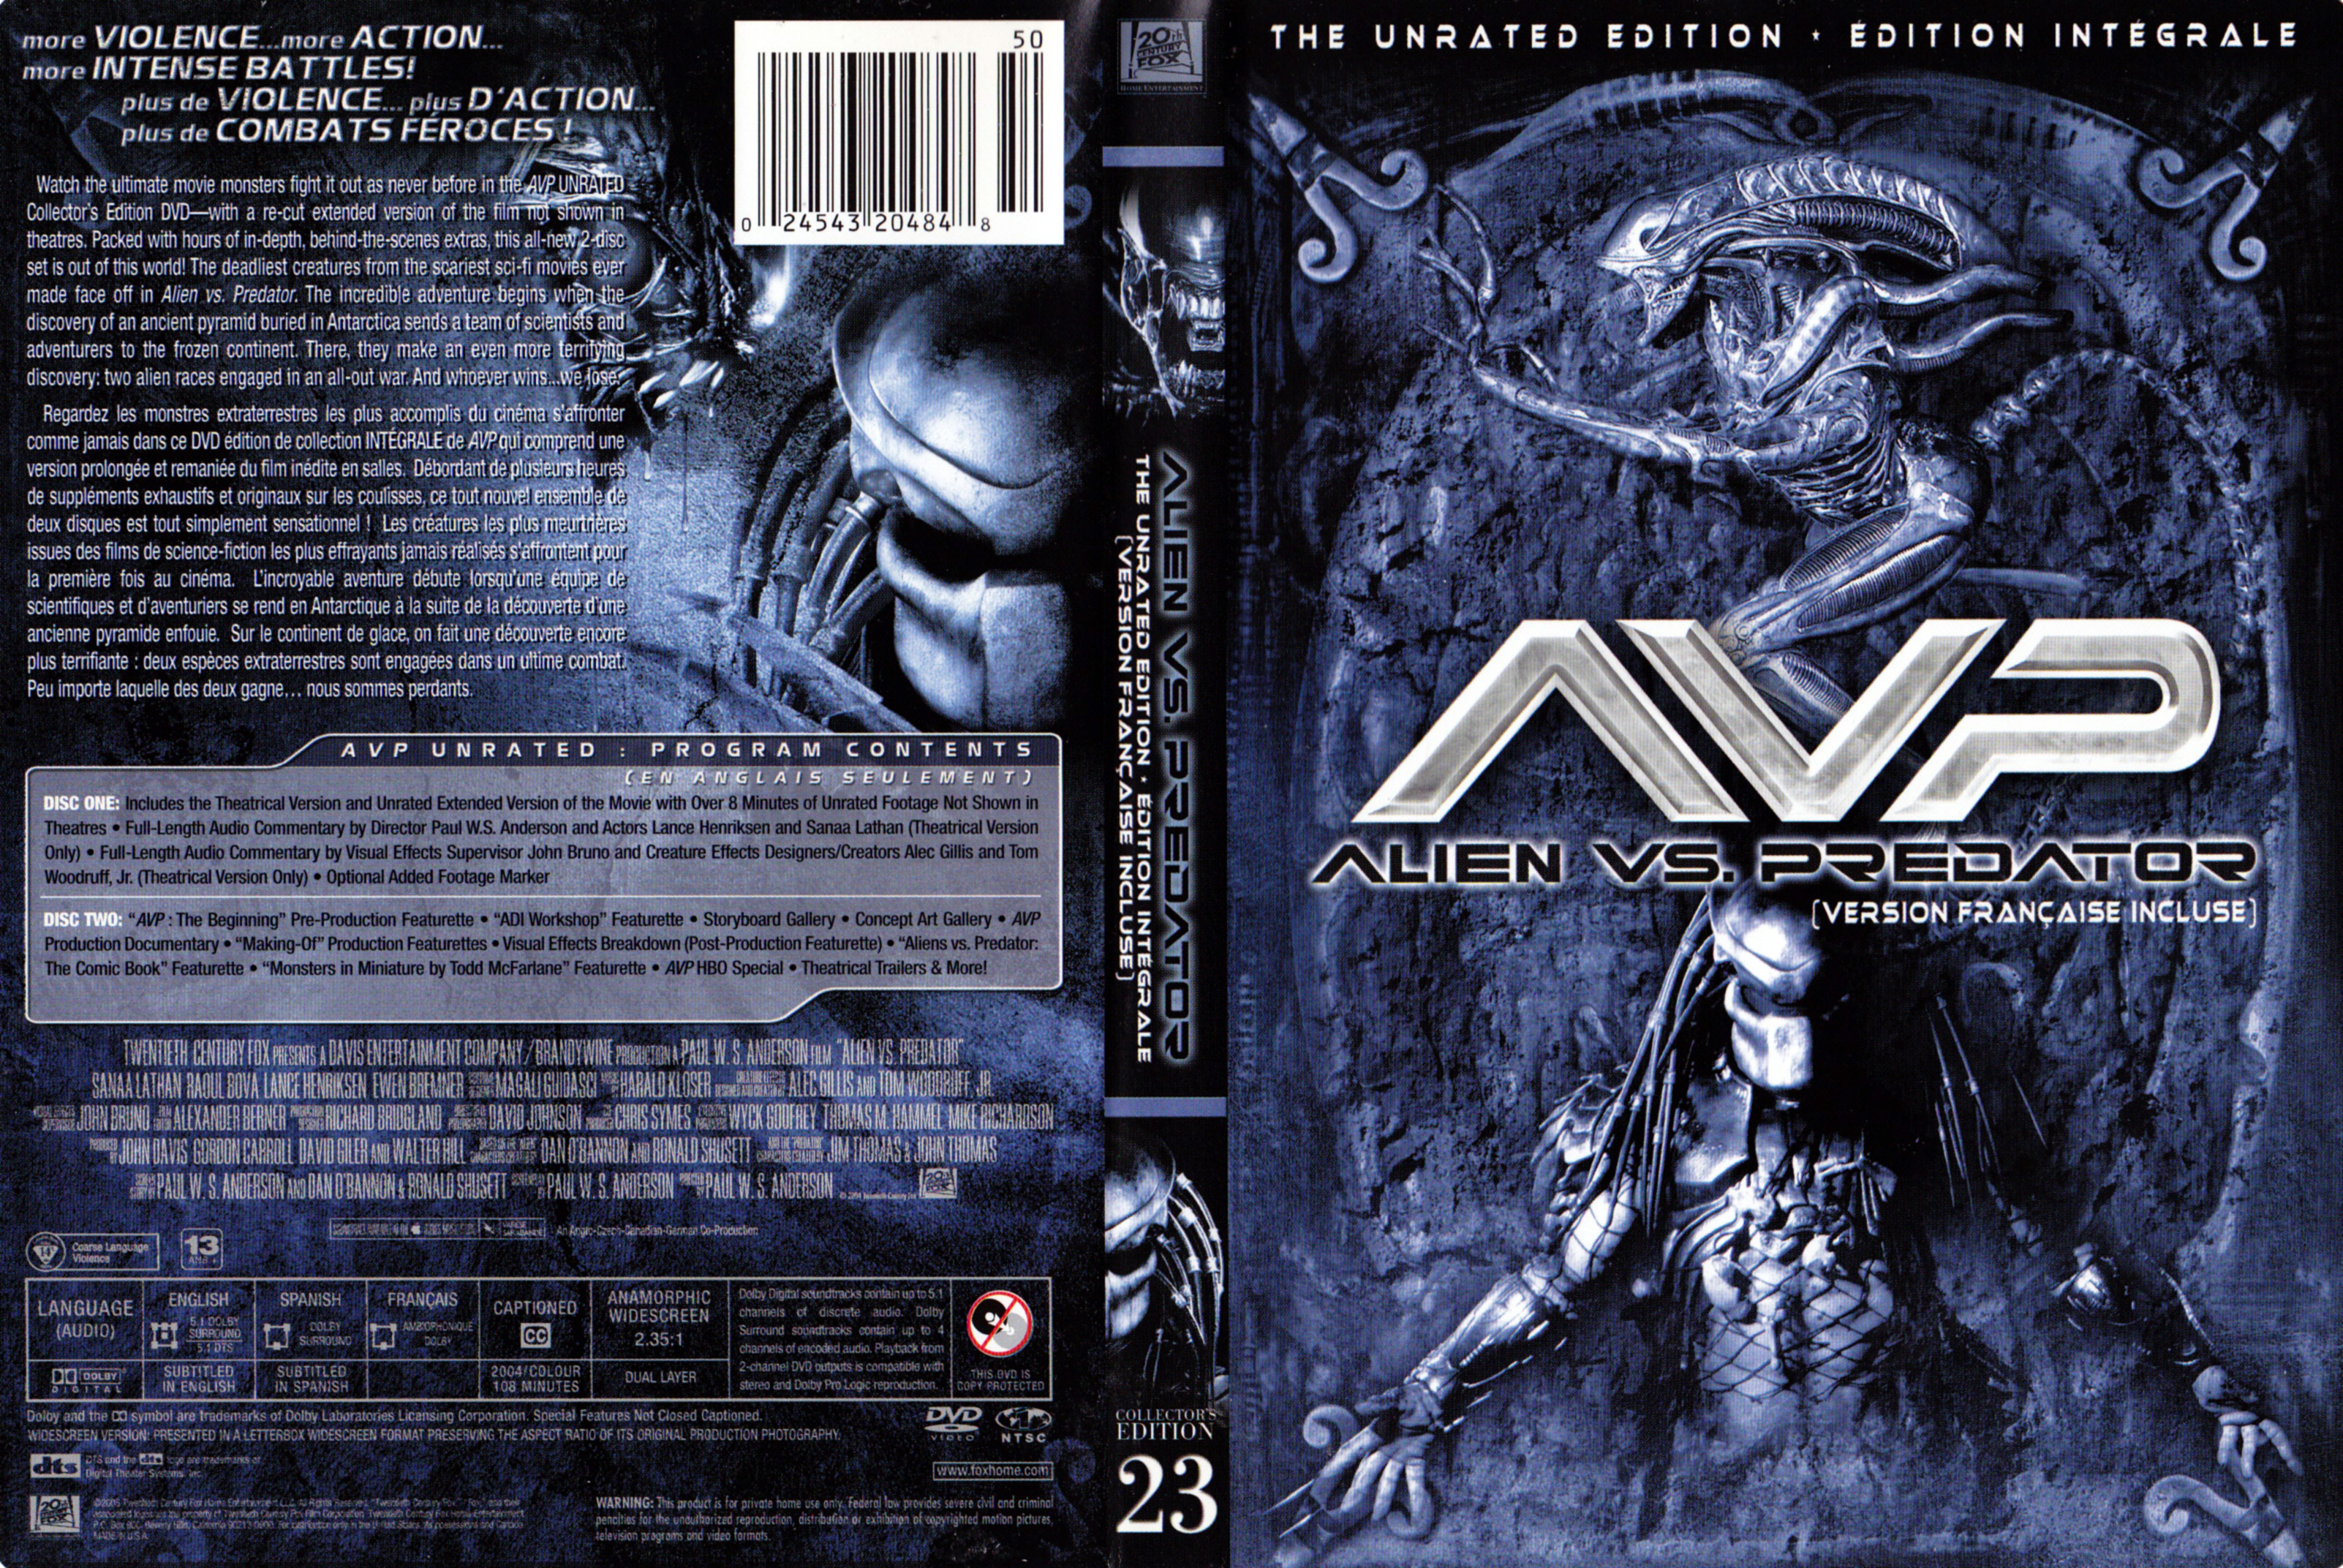 Jaquette DVD Alien Vs predator (Canadienne)